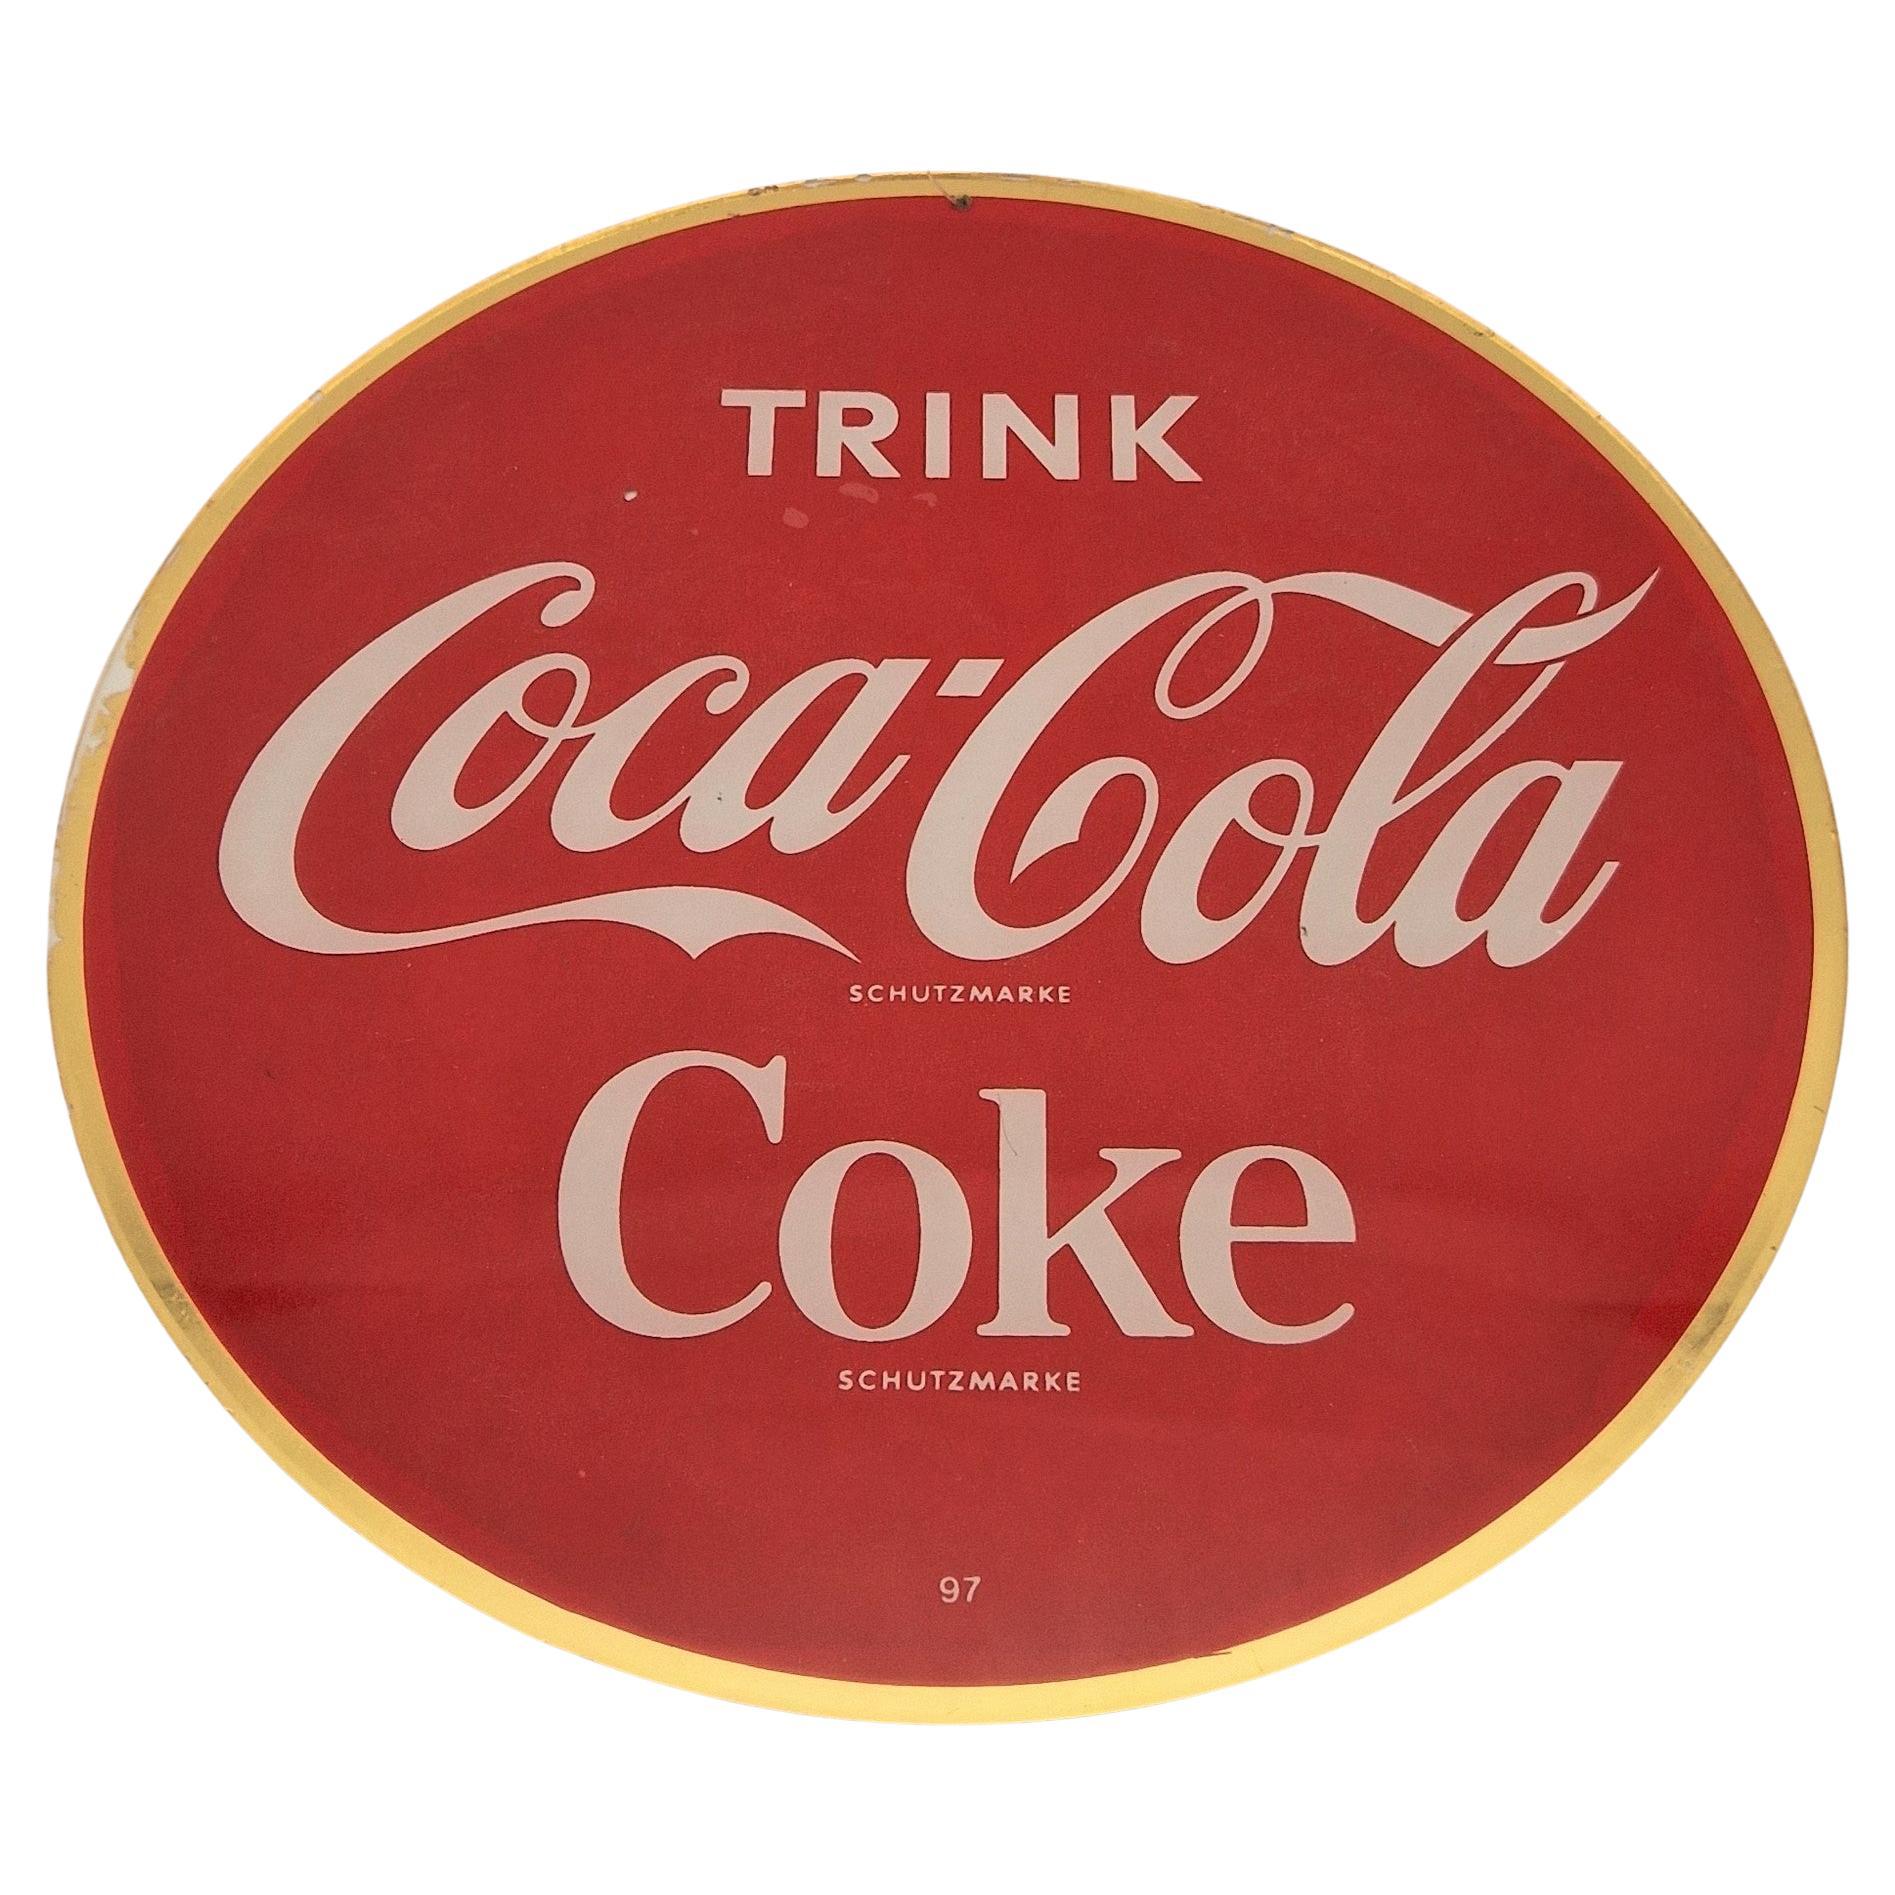 Werbeglasschild „Trink Coca Cola - Coke“ aus Werbeglas. 1950 - 1959 im Angebot